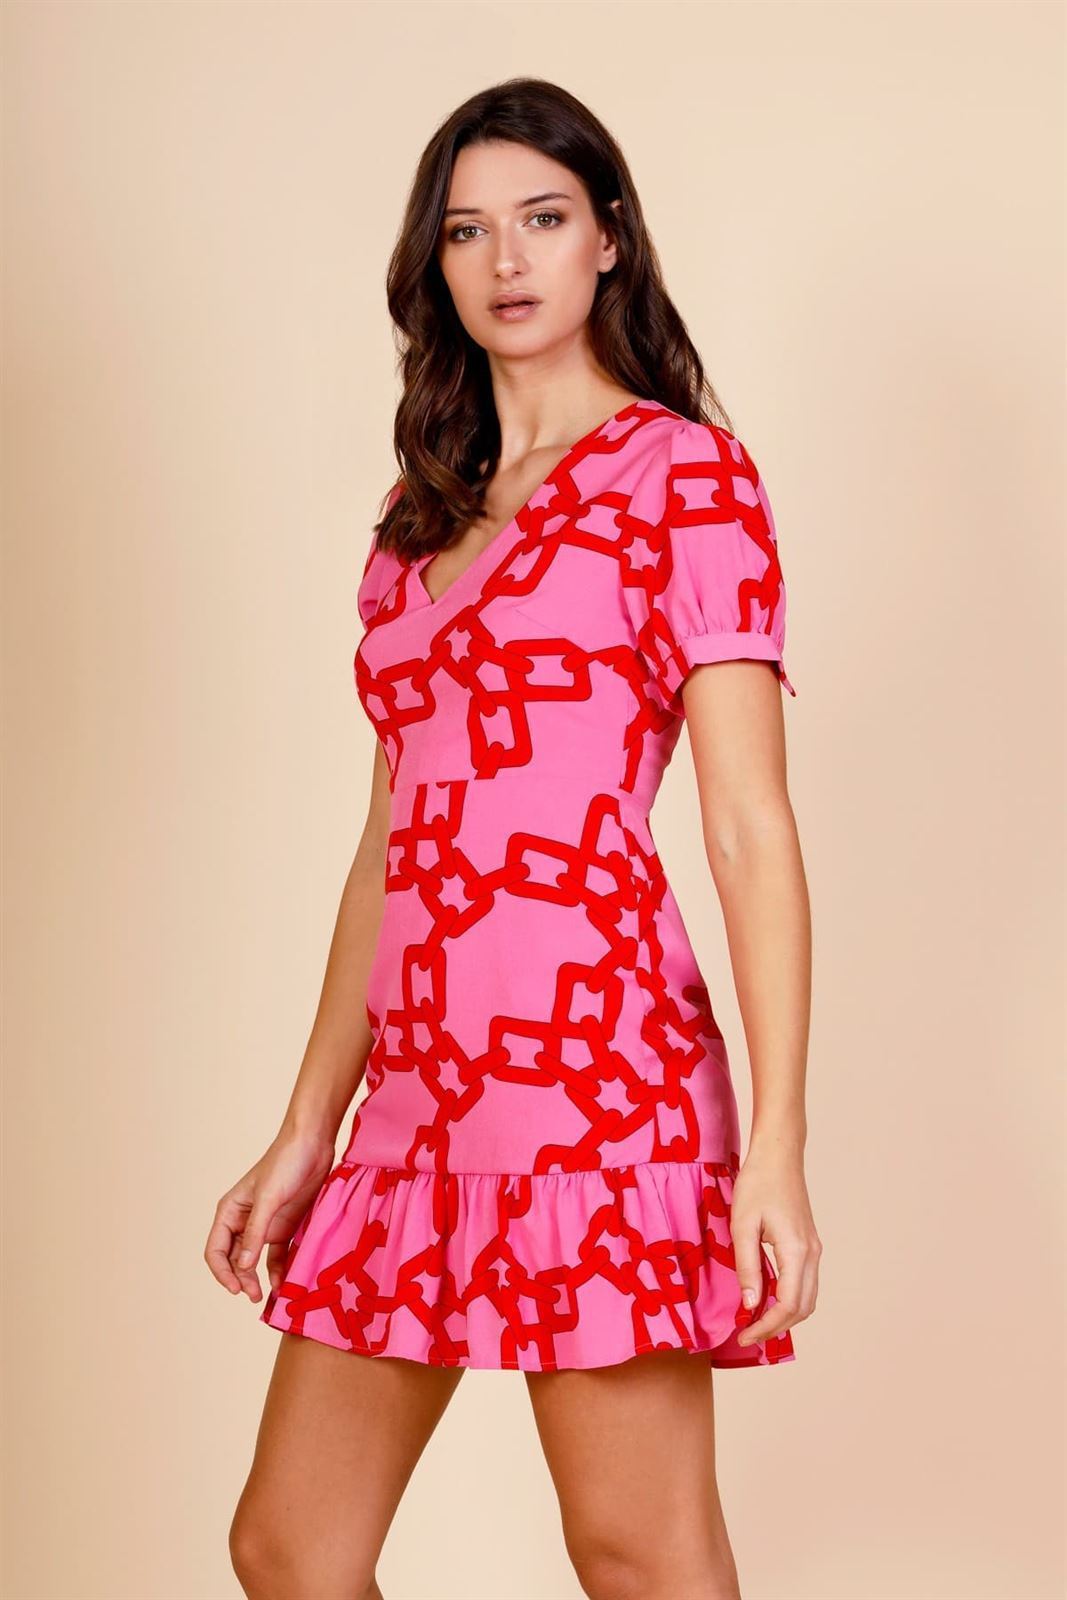 Vestido rosa/rojo cadenes susan dress - Imagen 1